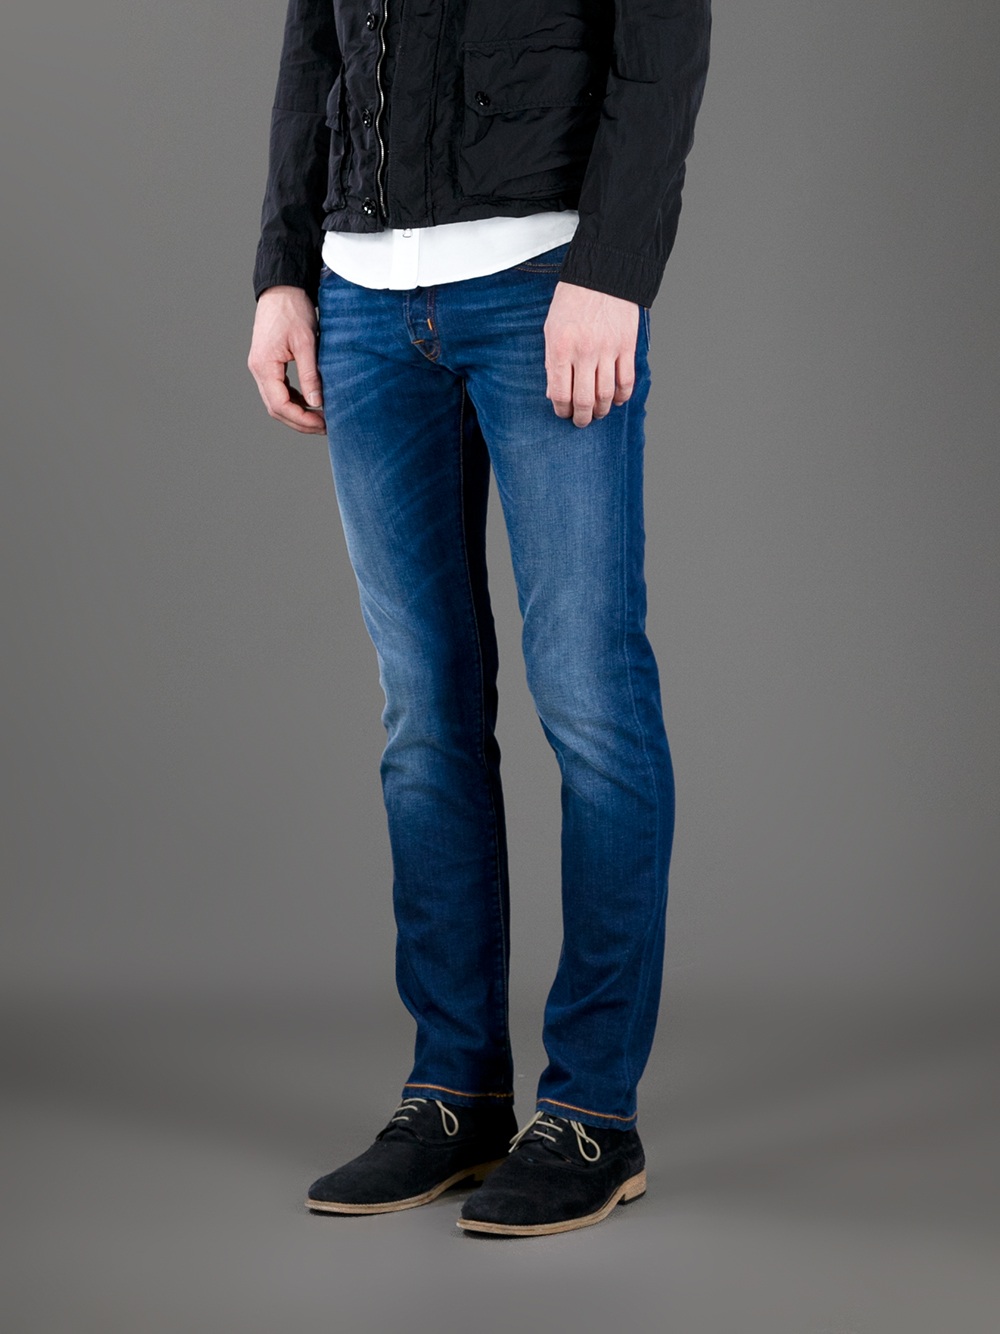 jacob cohen skinny jeans mens